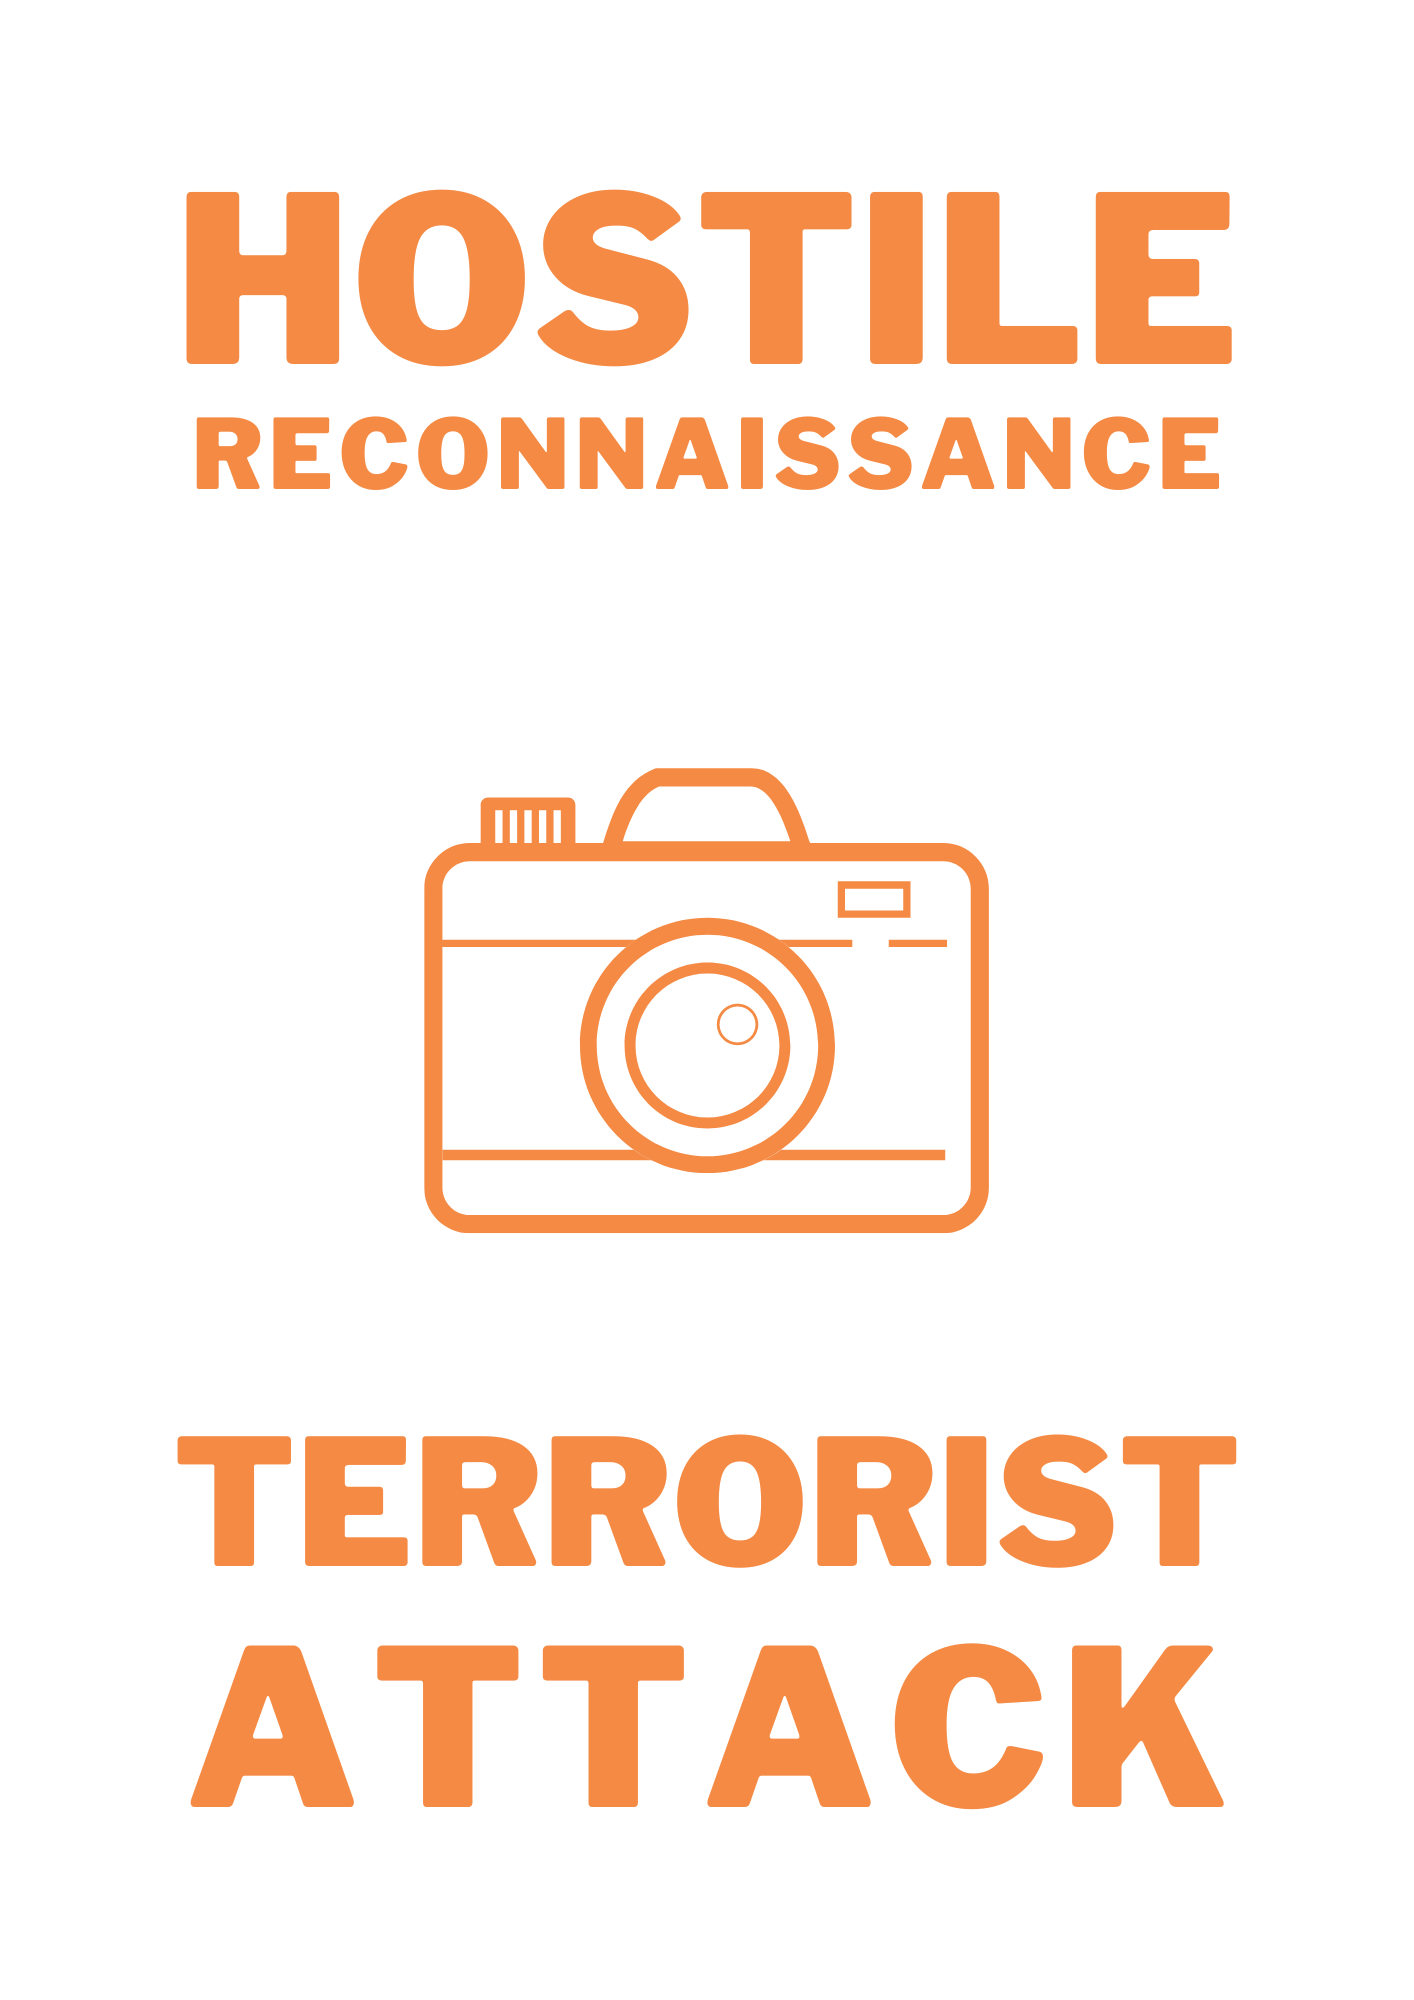 Hostile reconnaissance in a terrorist attack